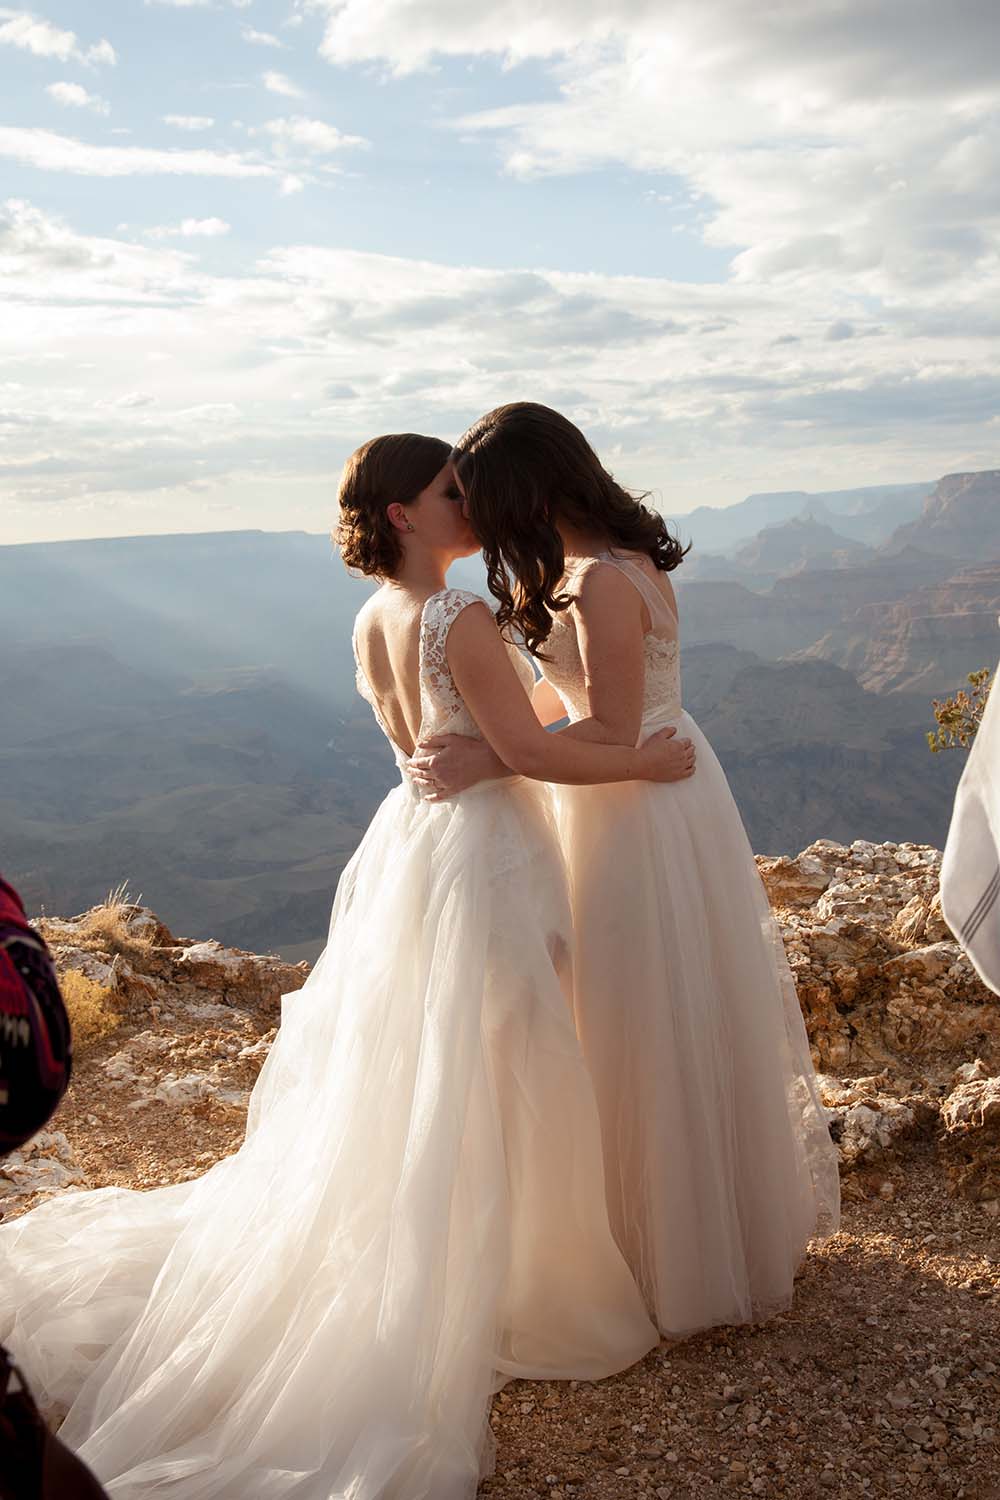 Grand Canyon Lesbian Wedding 40 Equally Wed Modern Lgbtq Weddings Lgbtq Inclusive